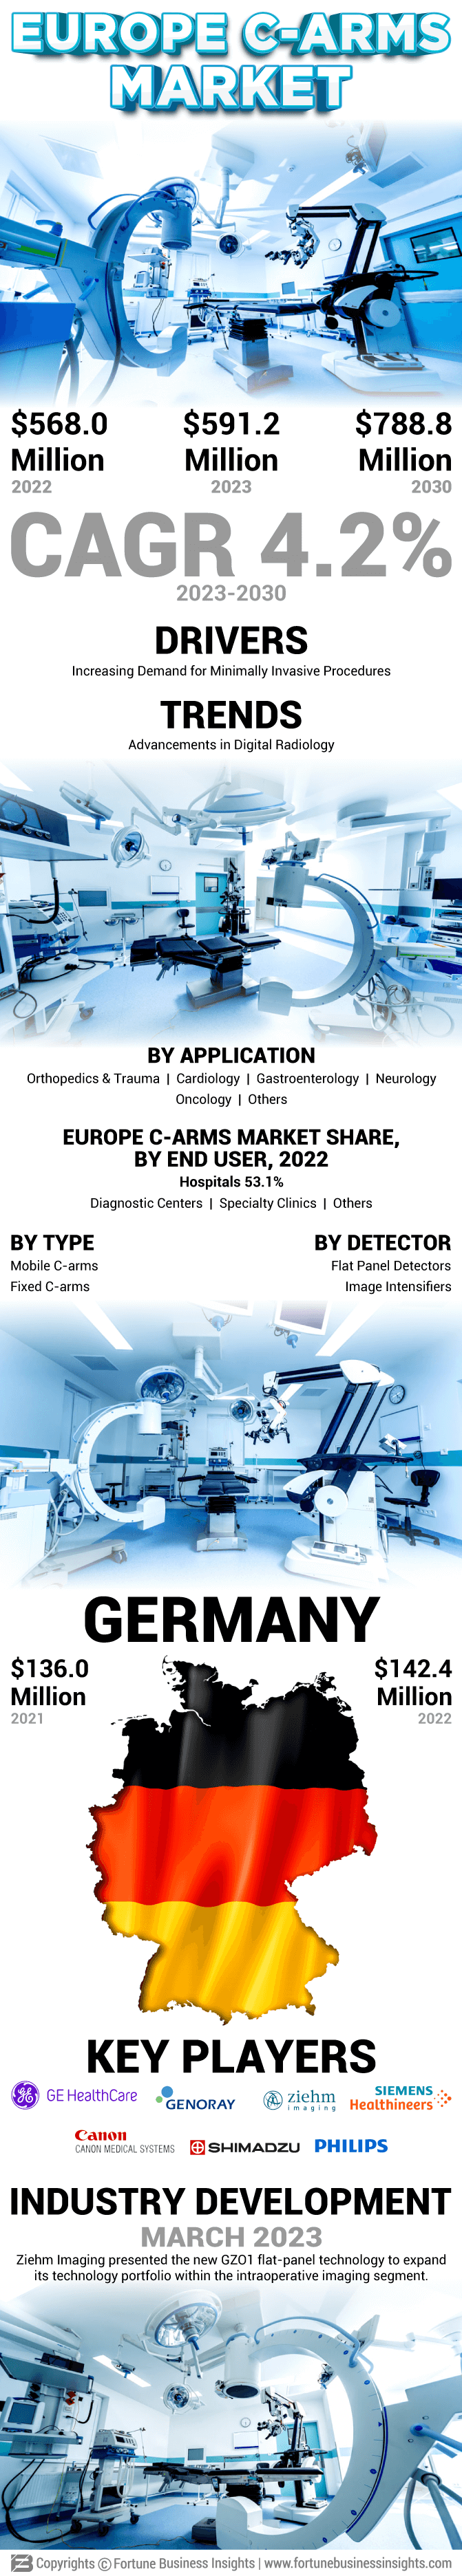 Europe C-arms Market